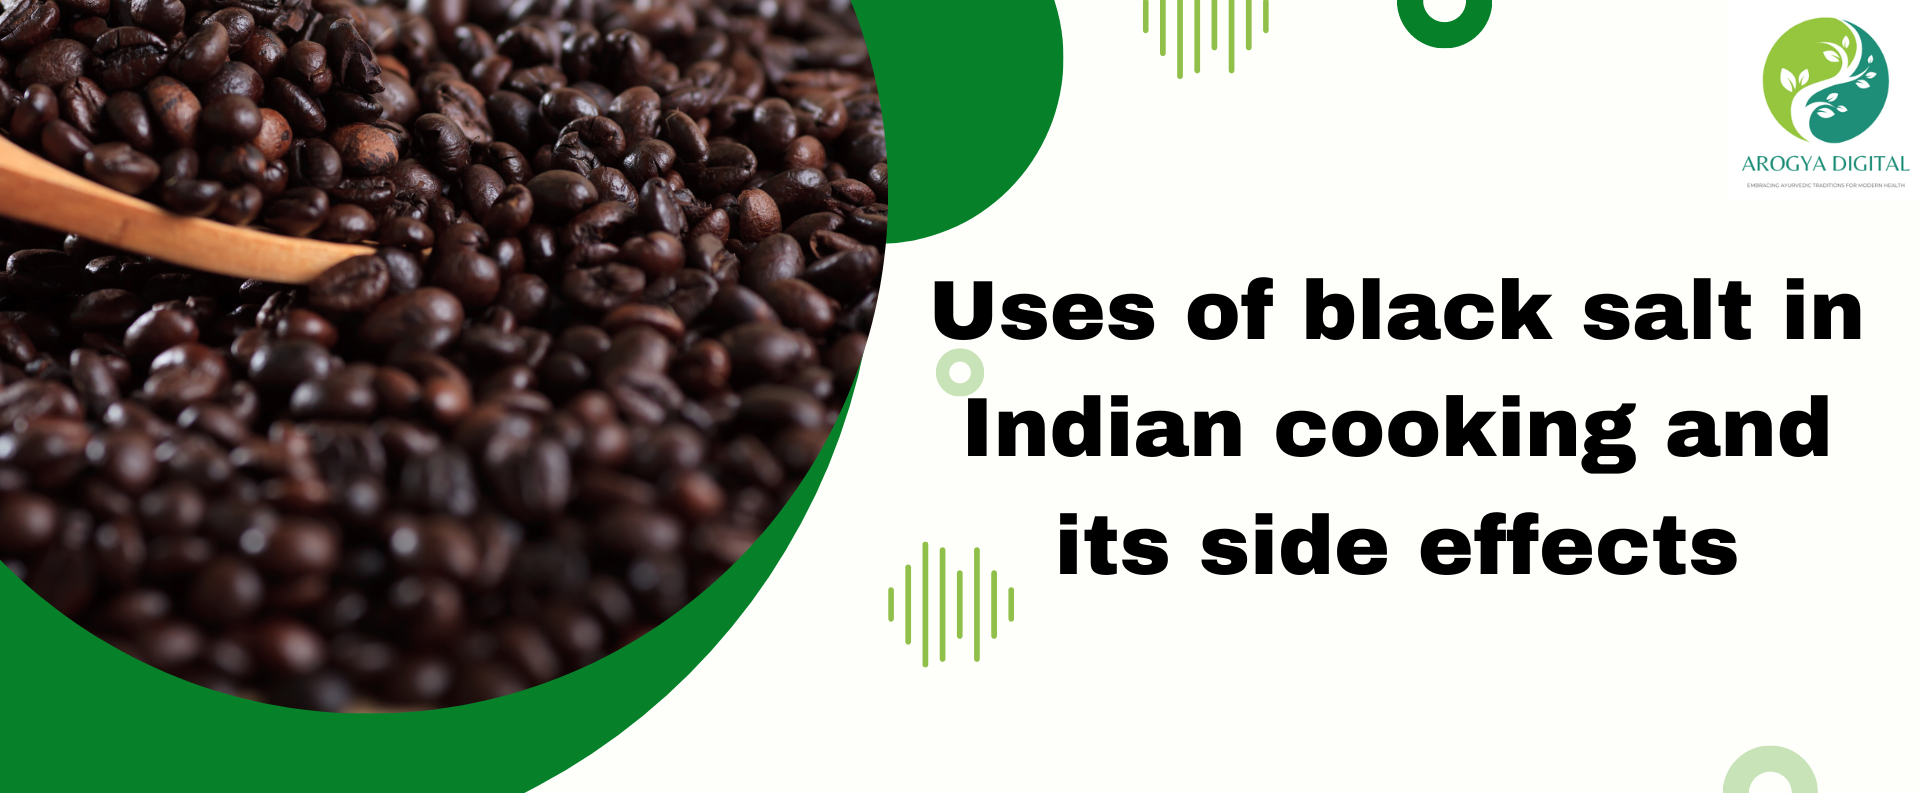 Uses of black salt in Indian cooking